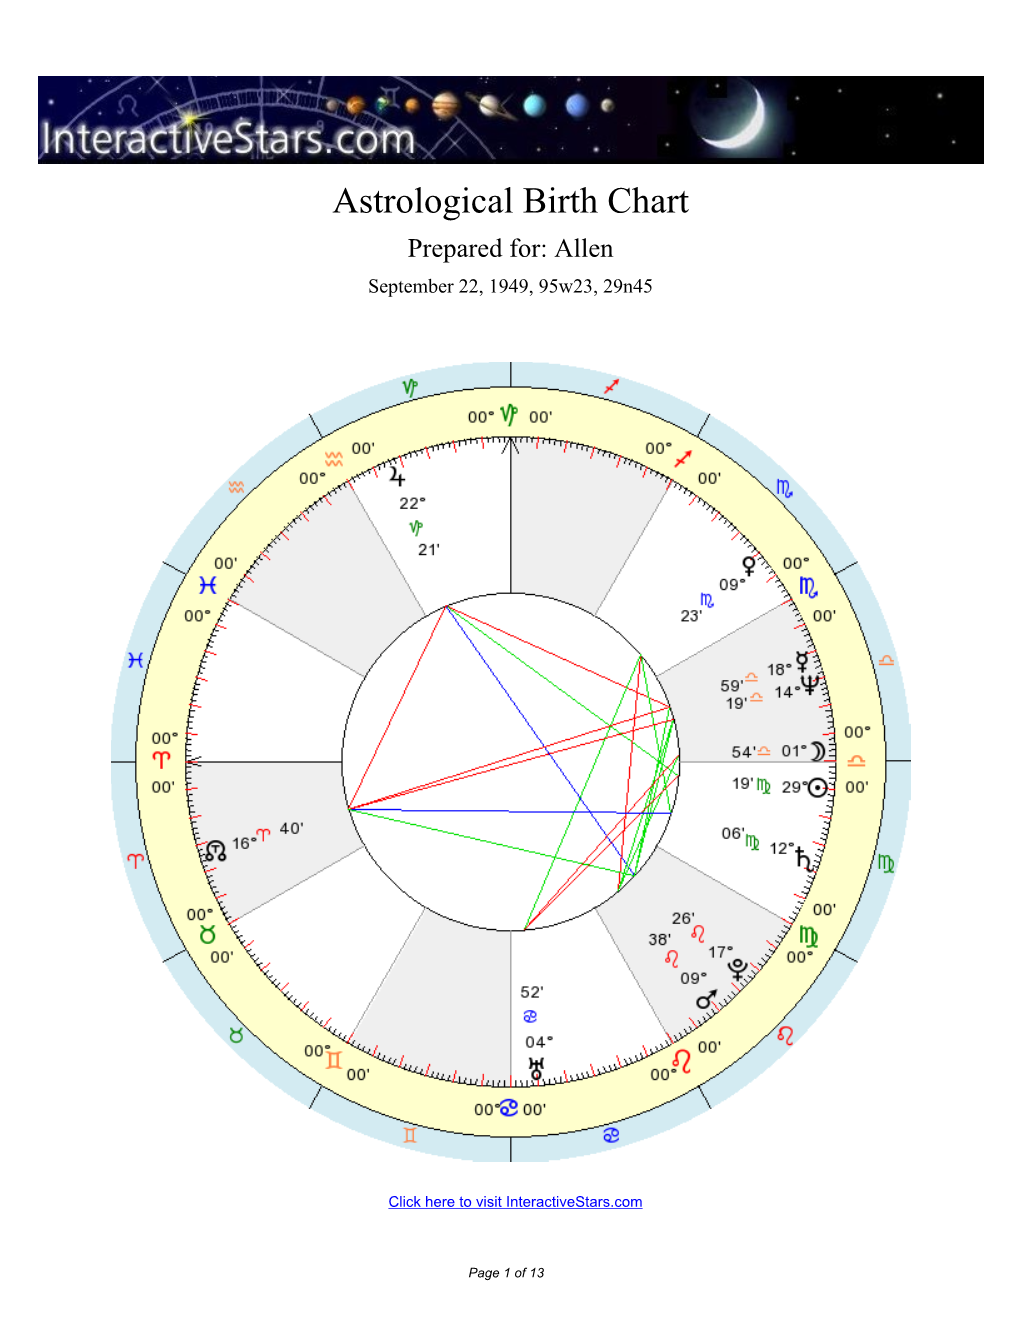 Astrological Birth Chart Prepared For: Allen September 22, 1949, 95W23, 29N45